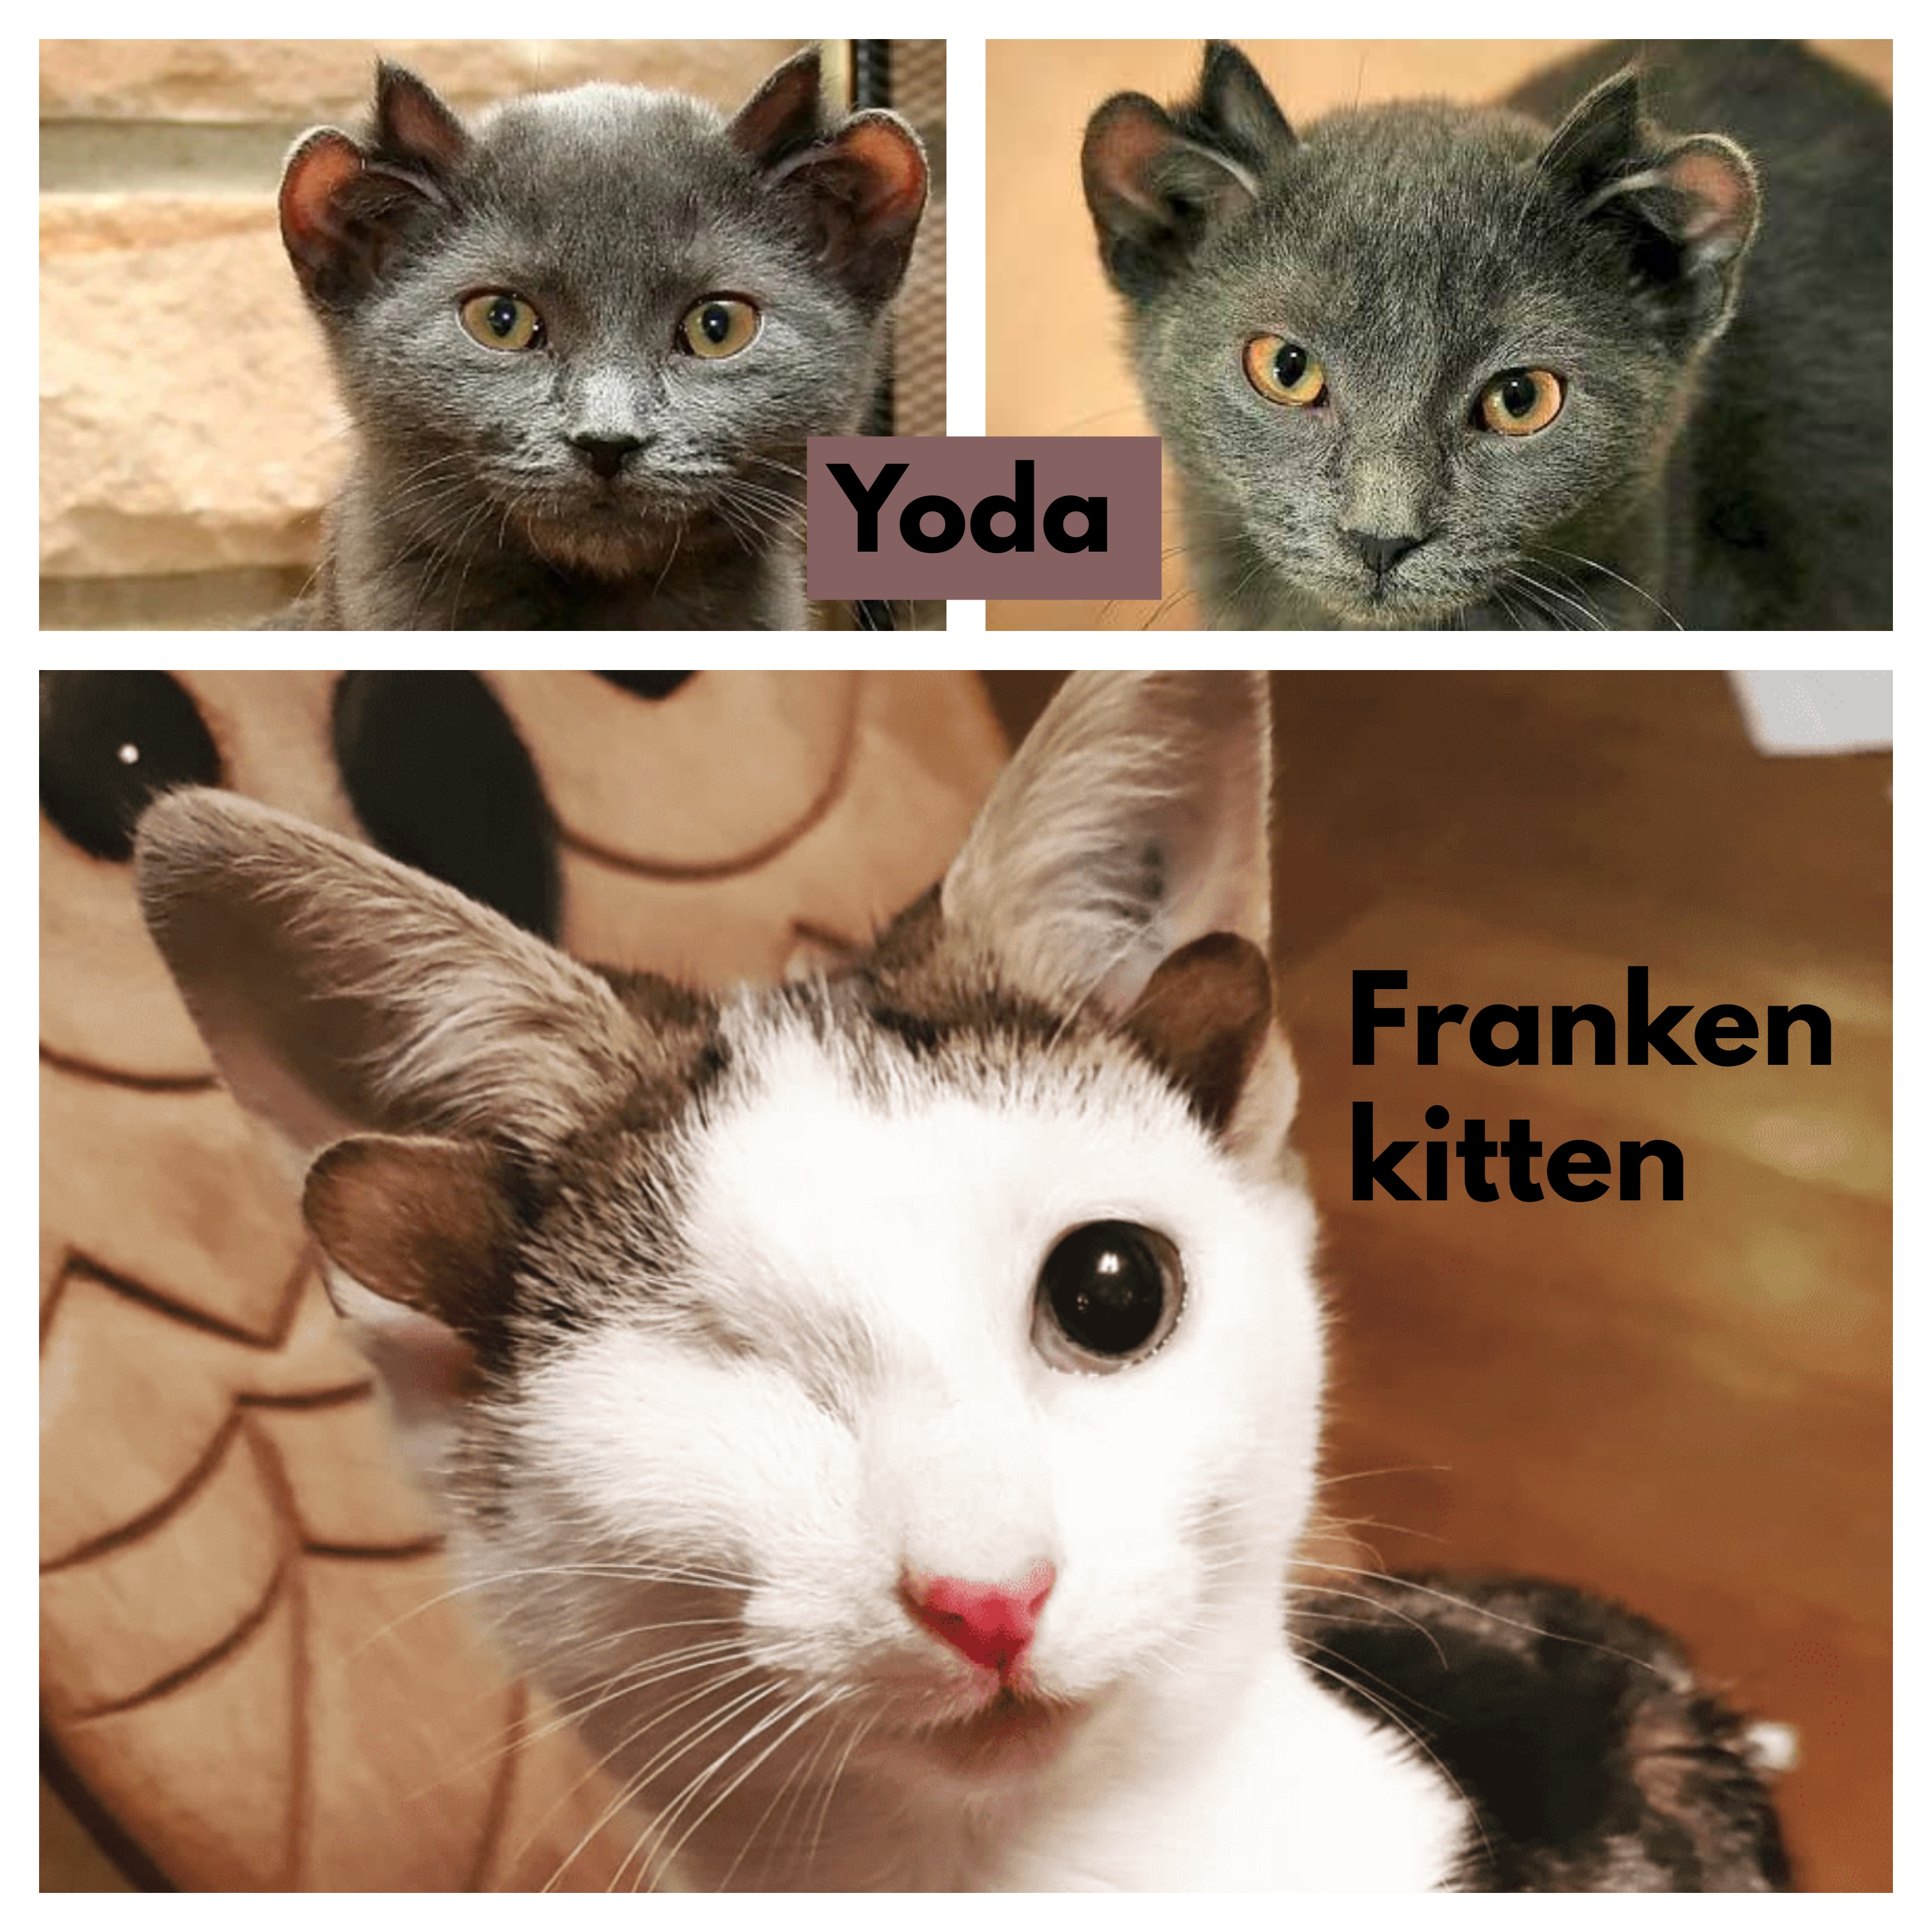 Yoda 4-eared cat; 4-eared and one-eyed white cat Frankenkitten